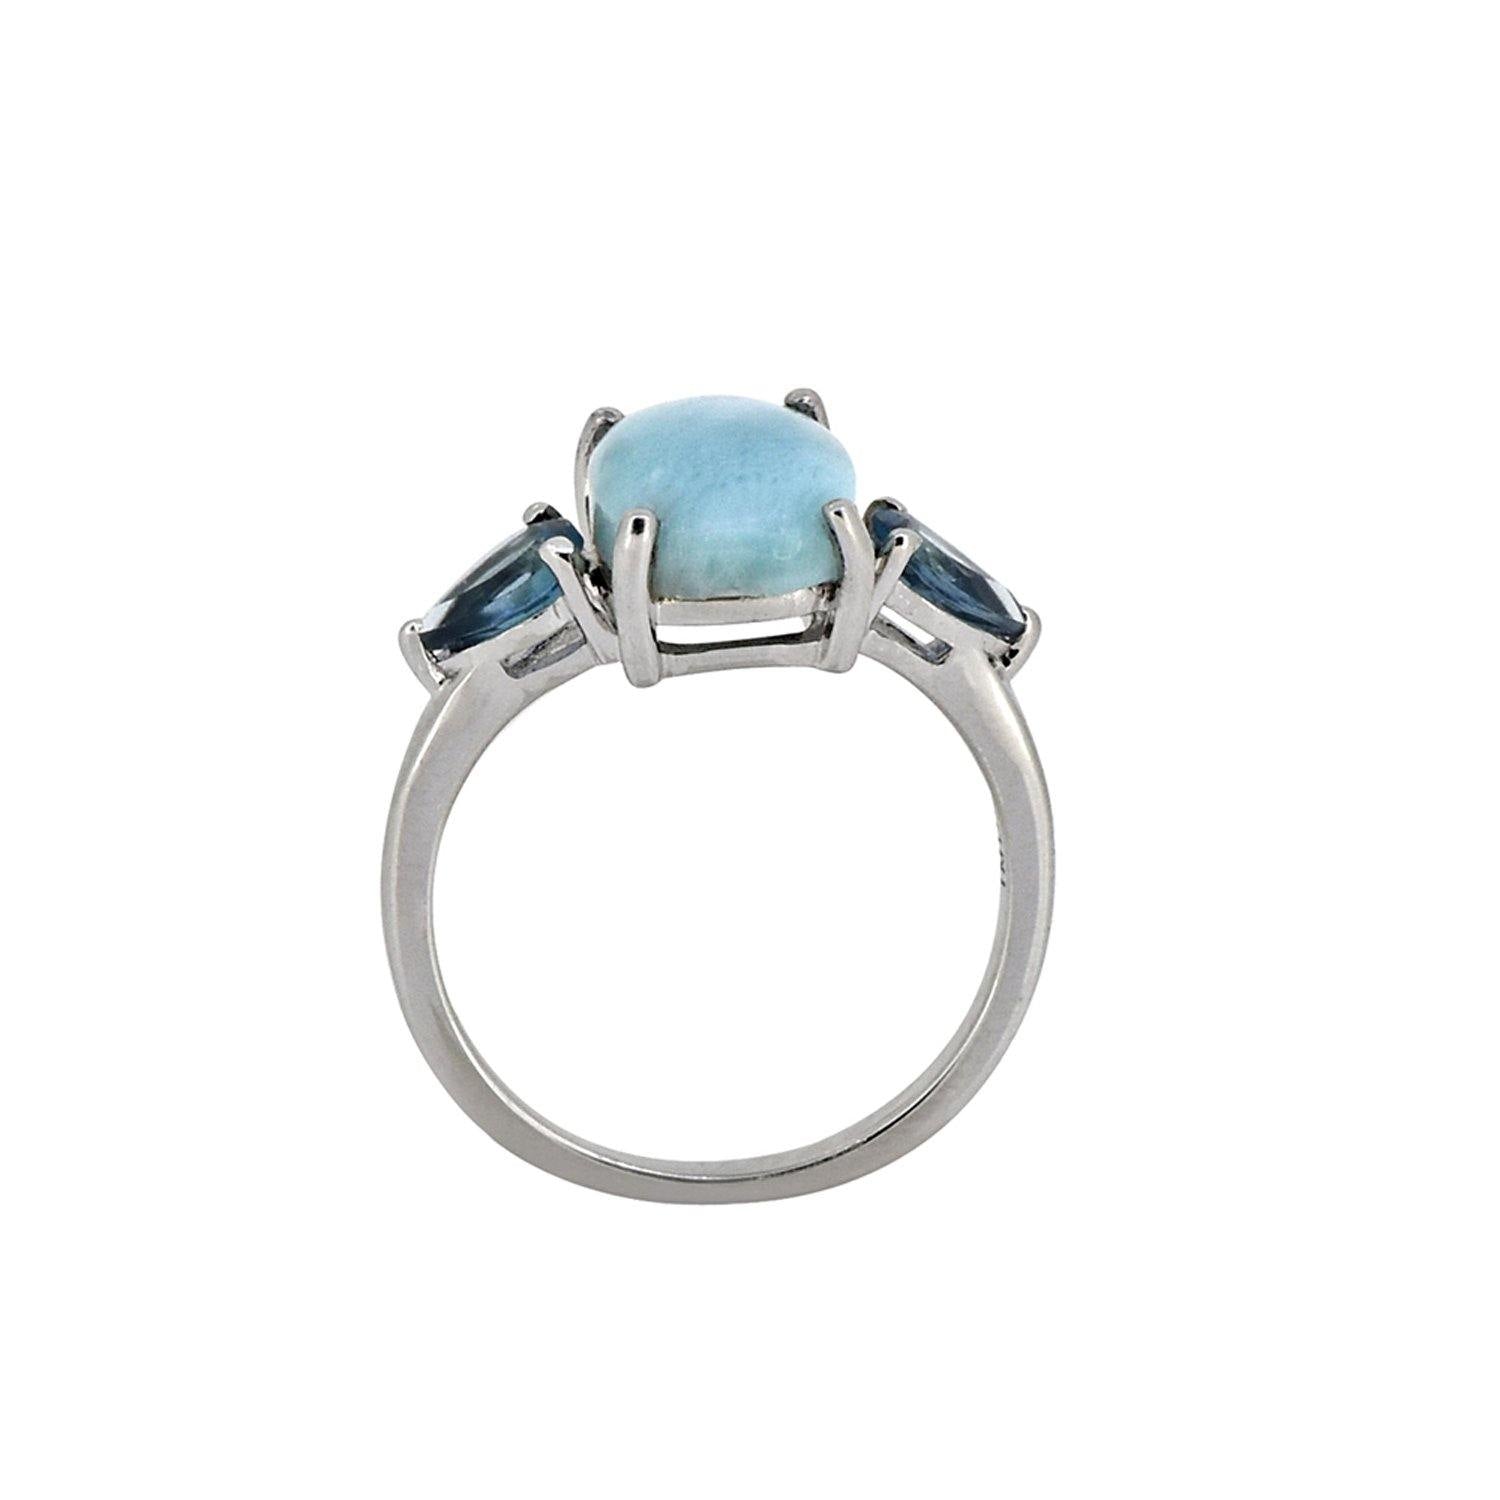 4.18 Ct. Larimar London Blue Topaz Solid 925 Sterling Silver Ring Jewelry - YoTreasure